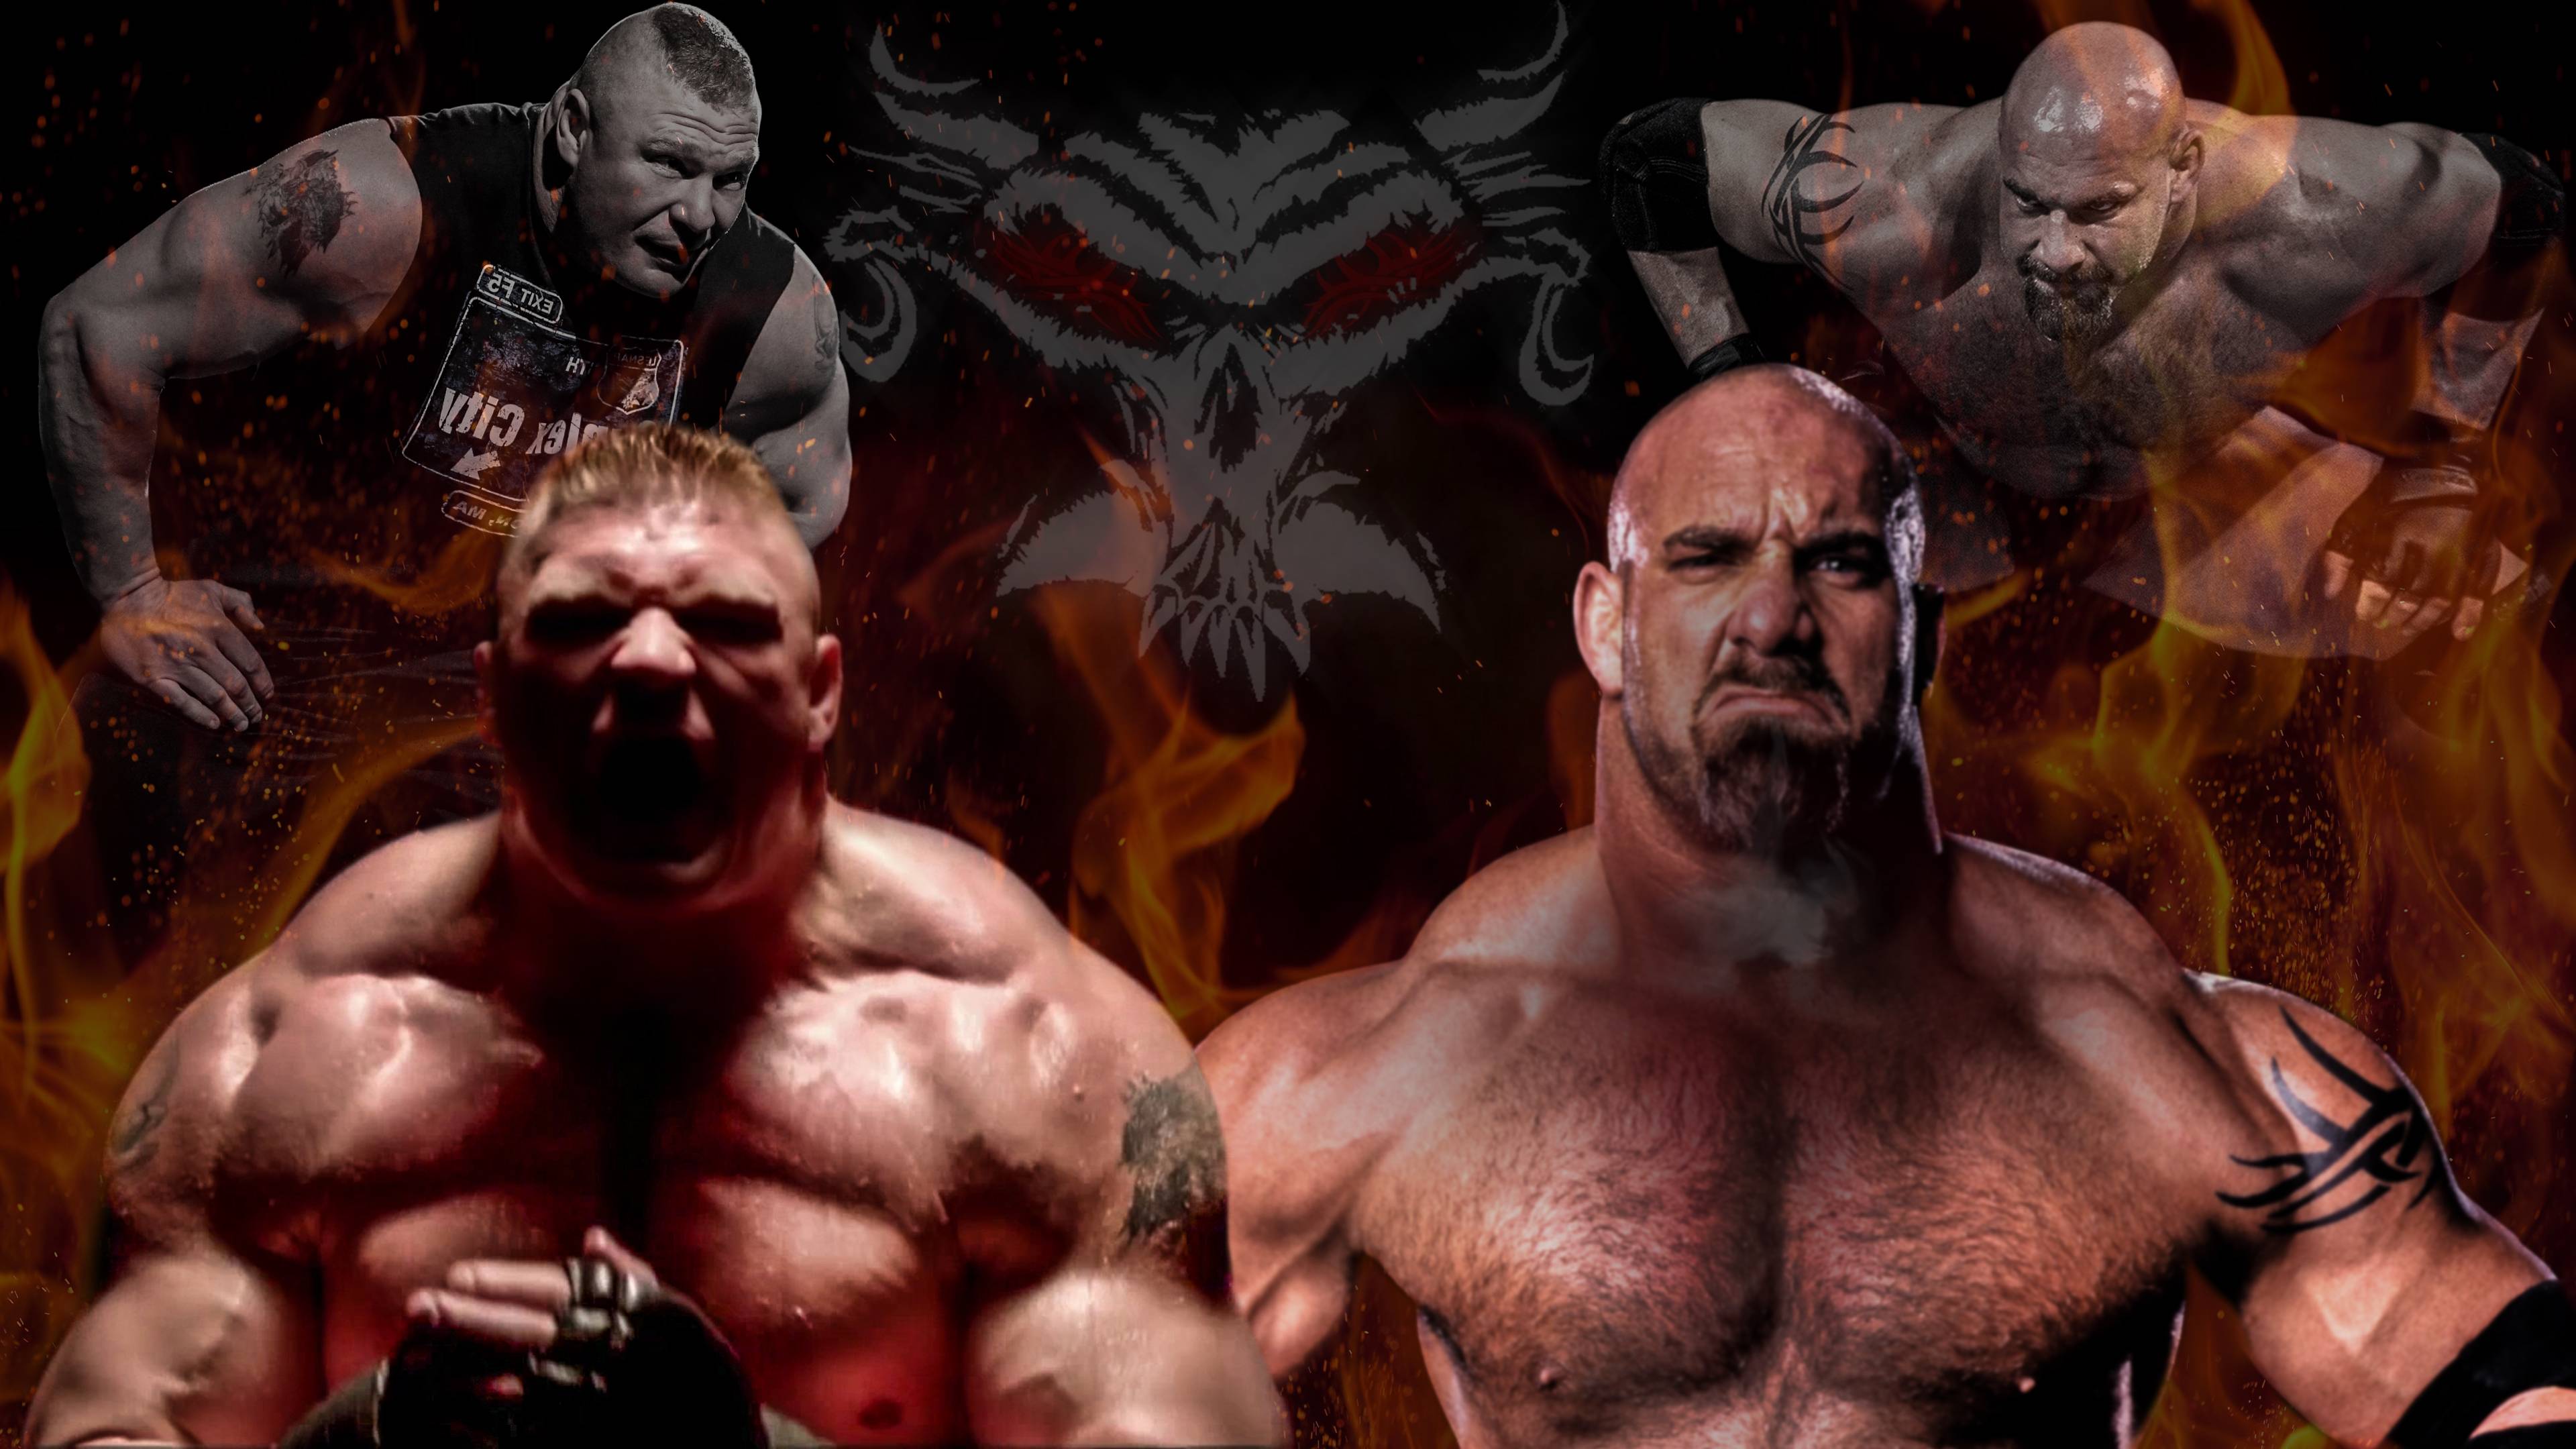 I just made my first wallpaper - Brock Lesnar vs Goldberg. What do